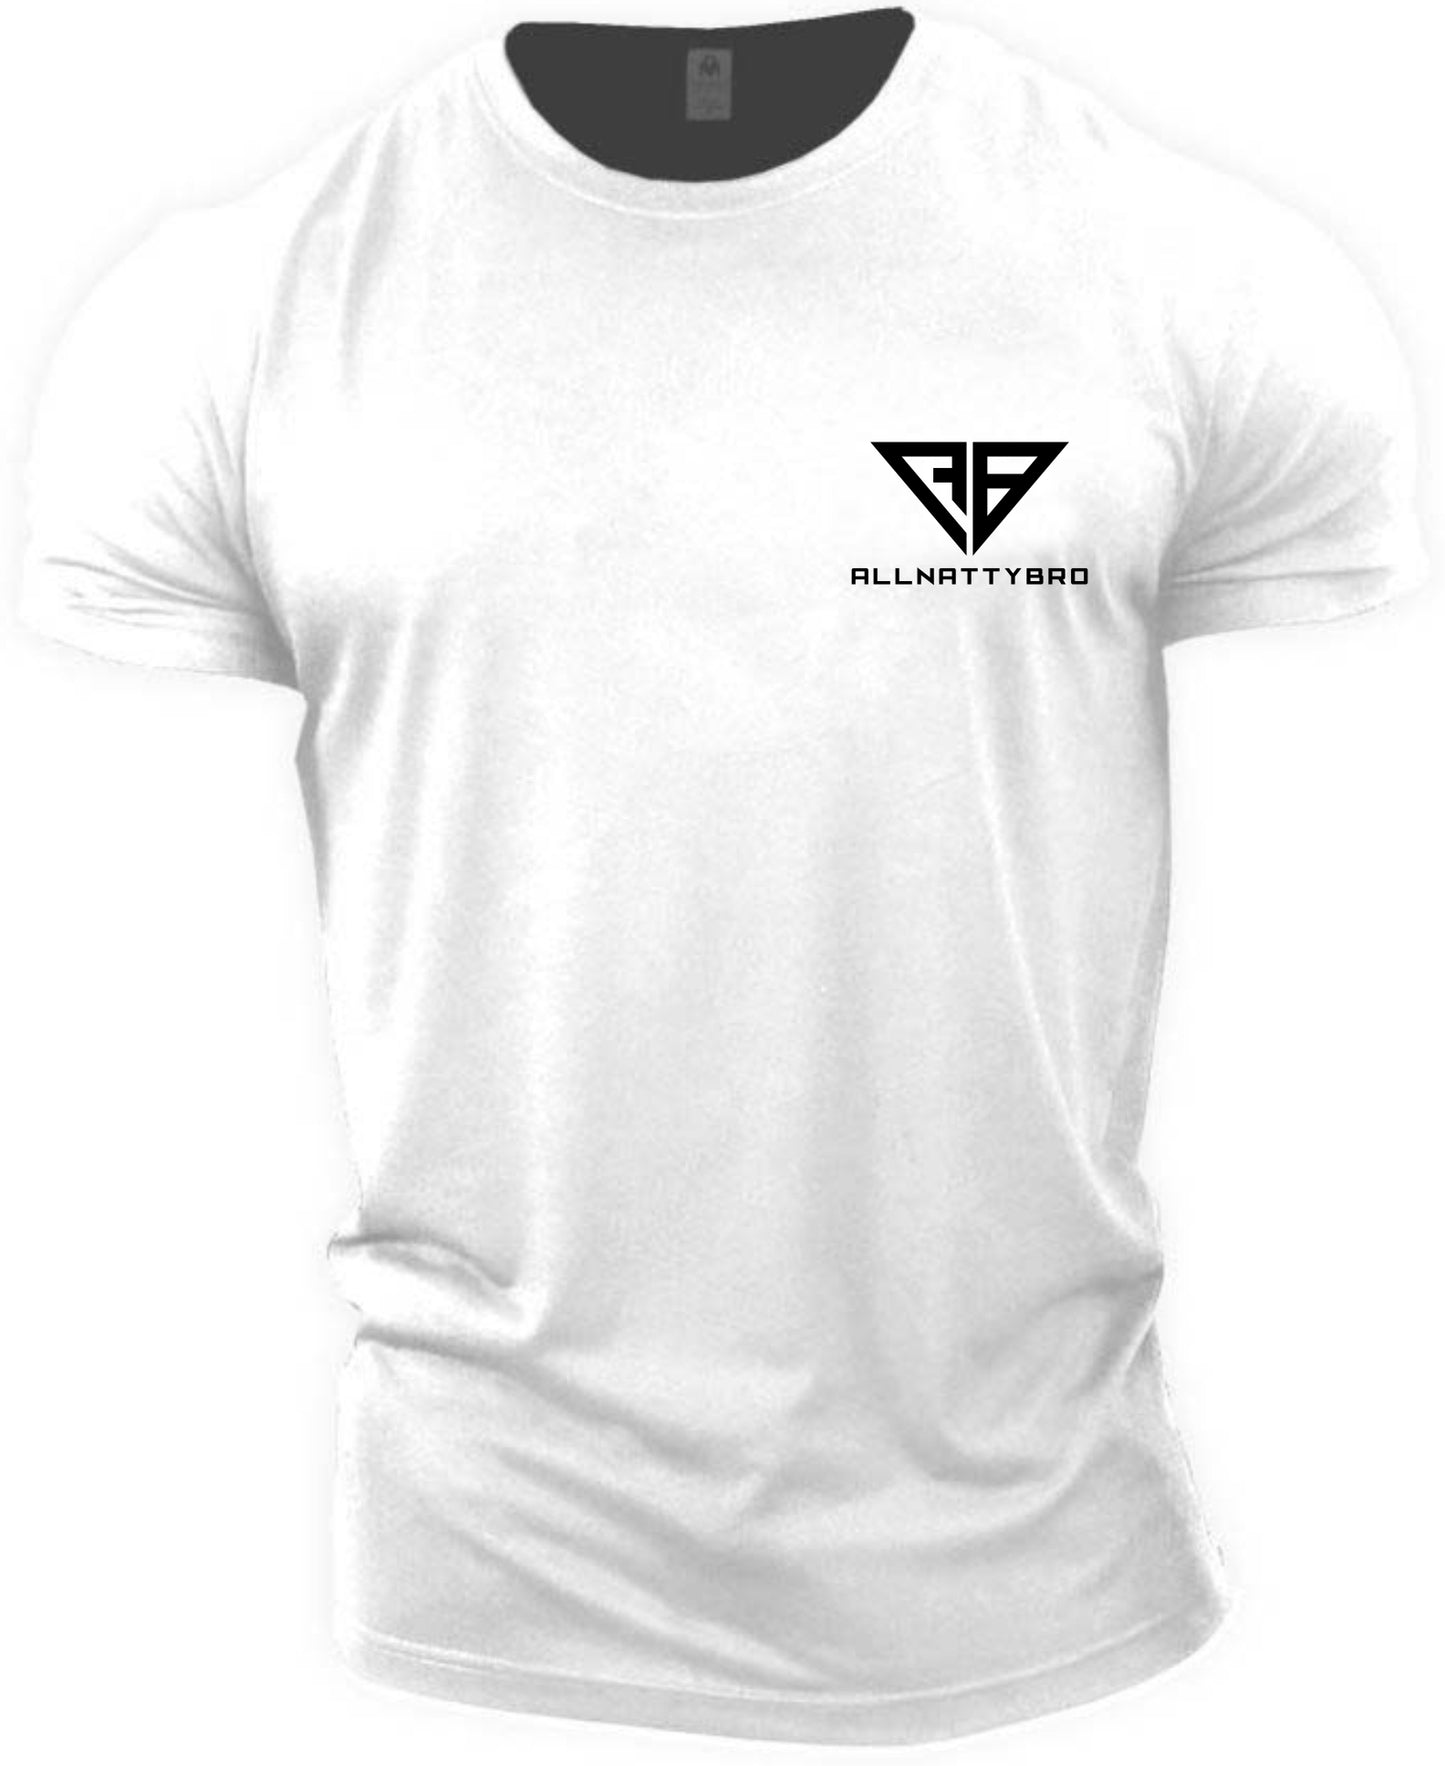 AllNattyBro T-shirt (Front and Back)